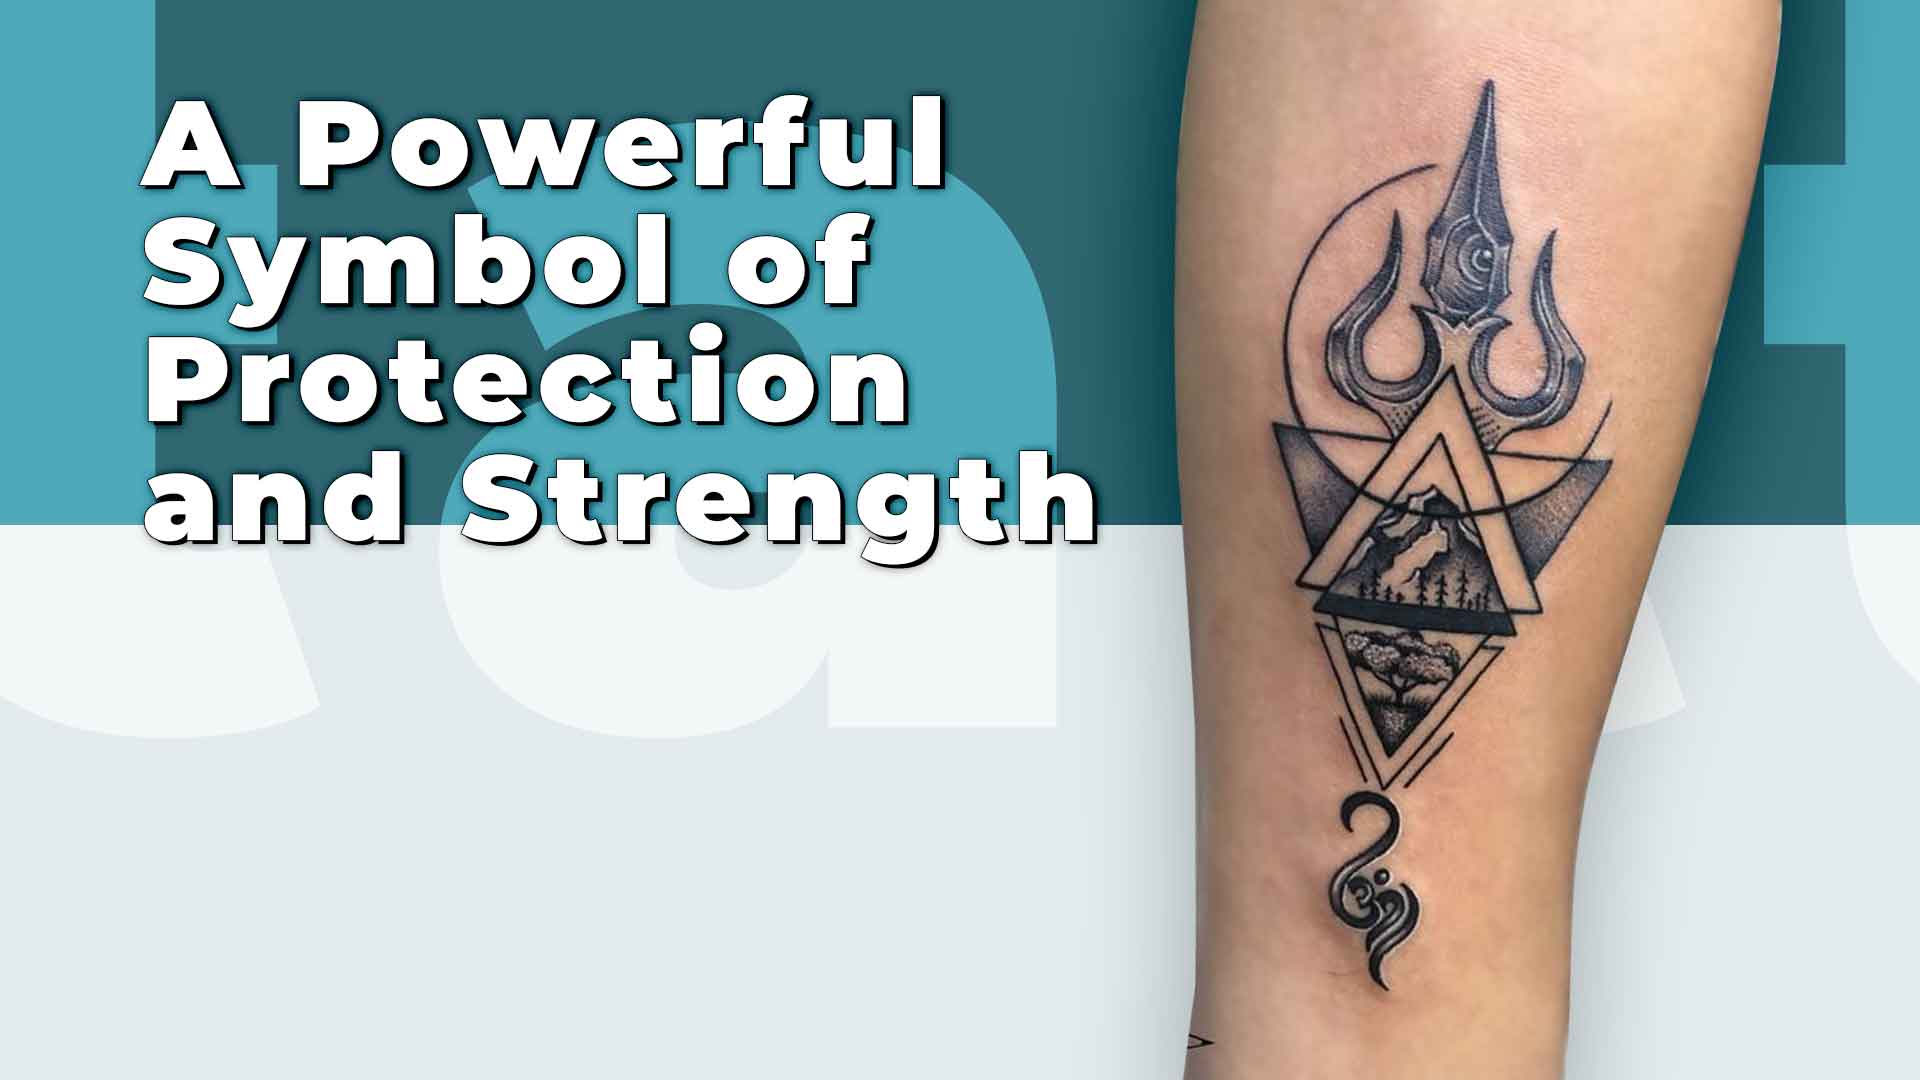 Strength tattoo design rough by bunbunsupreme on DeviantArt